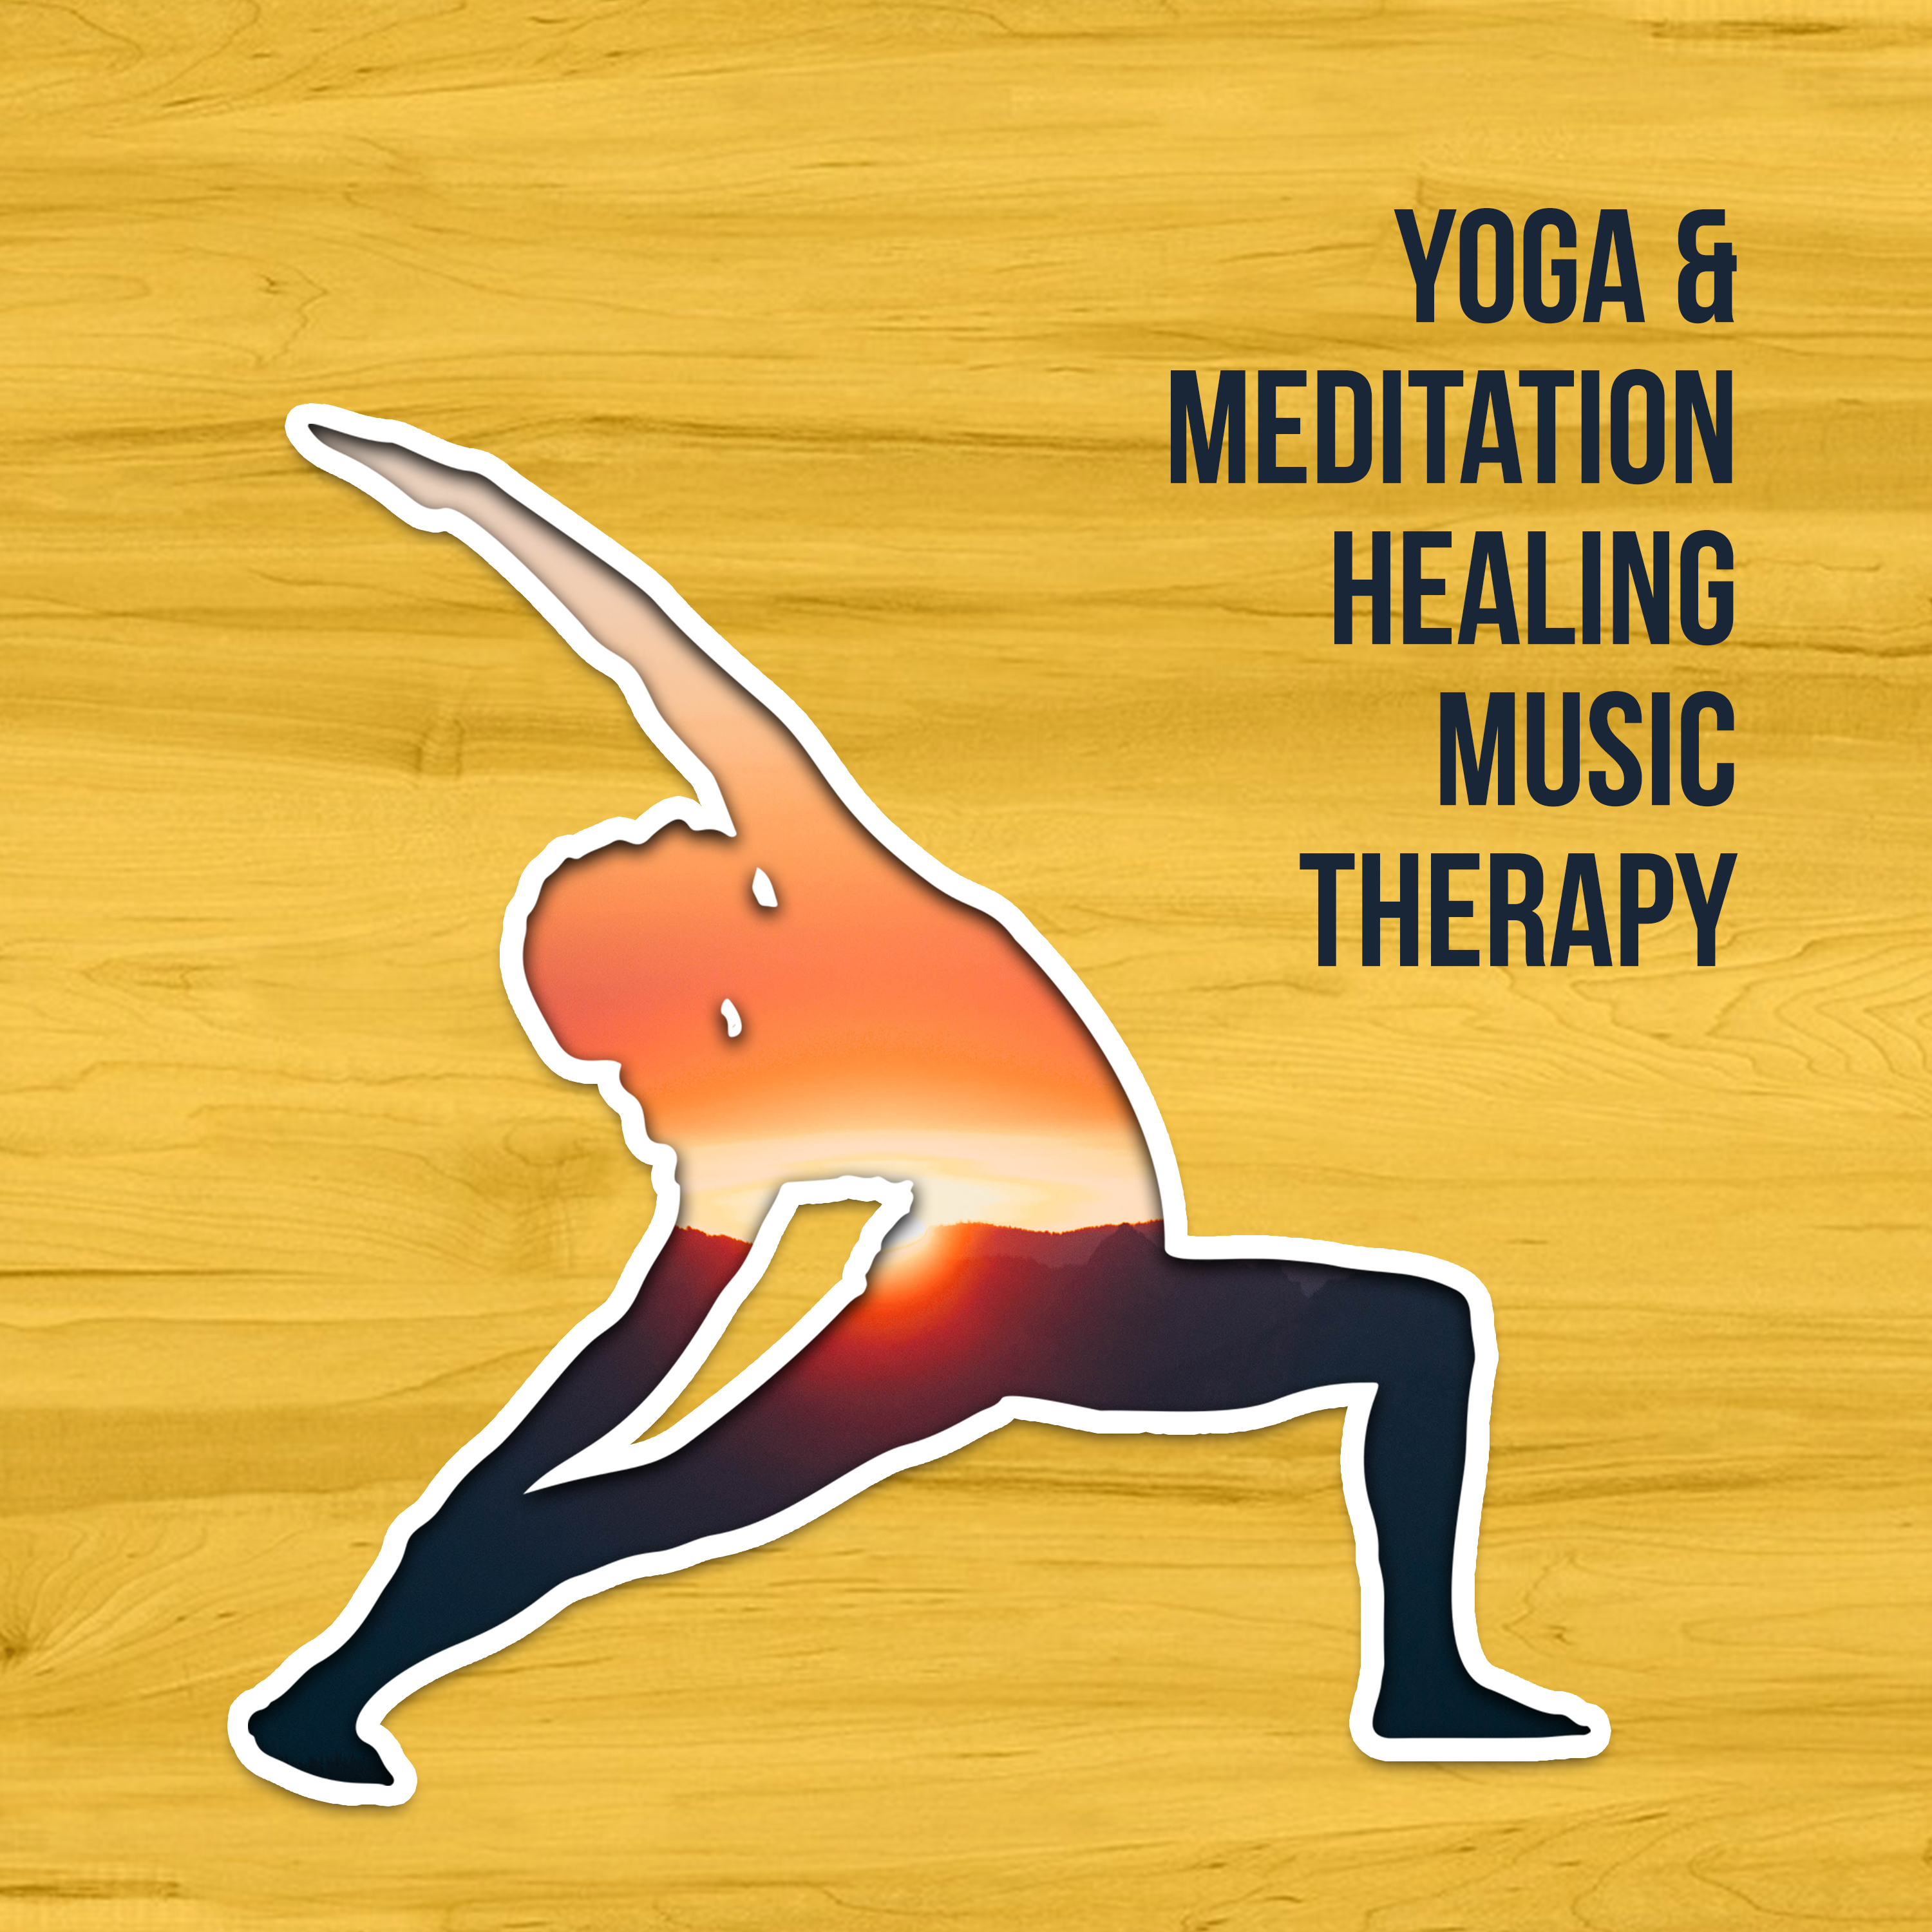 Yoga & Meditation Healing Music Therapy